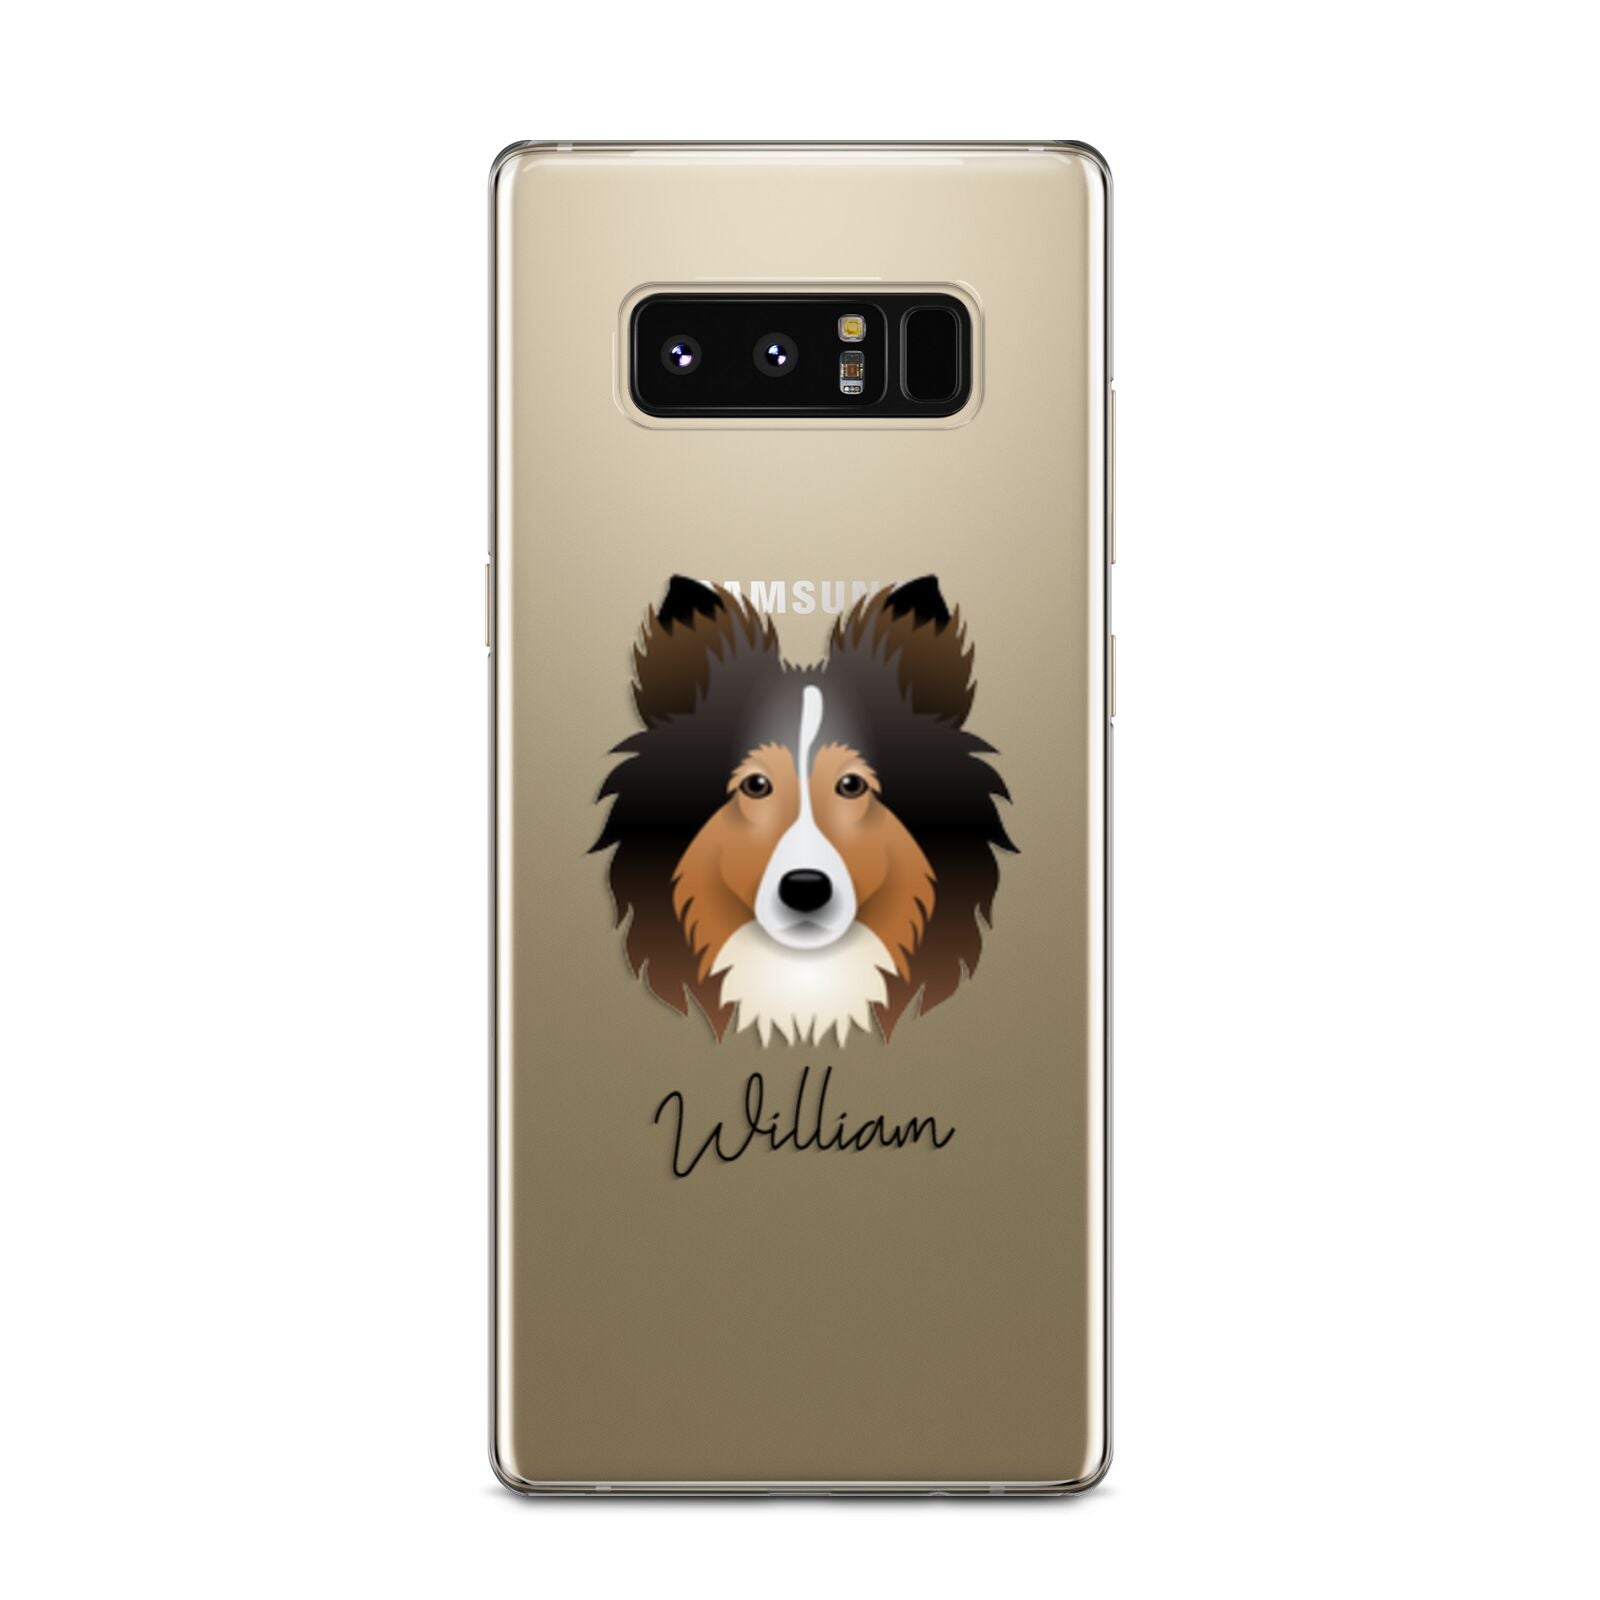 Shetland Sheepdog Personalised Samsung Galaxy Note 8 Case